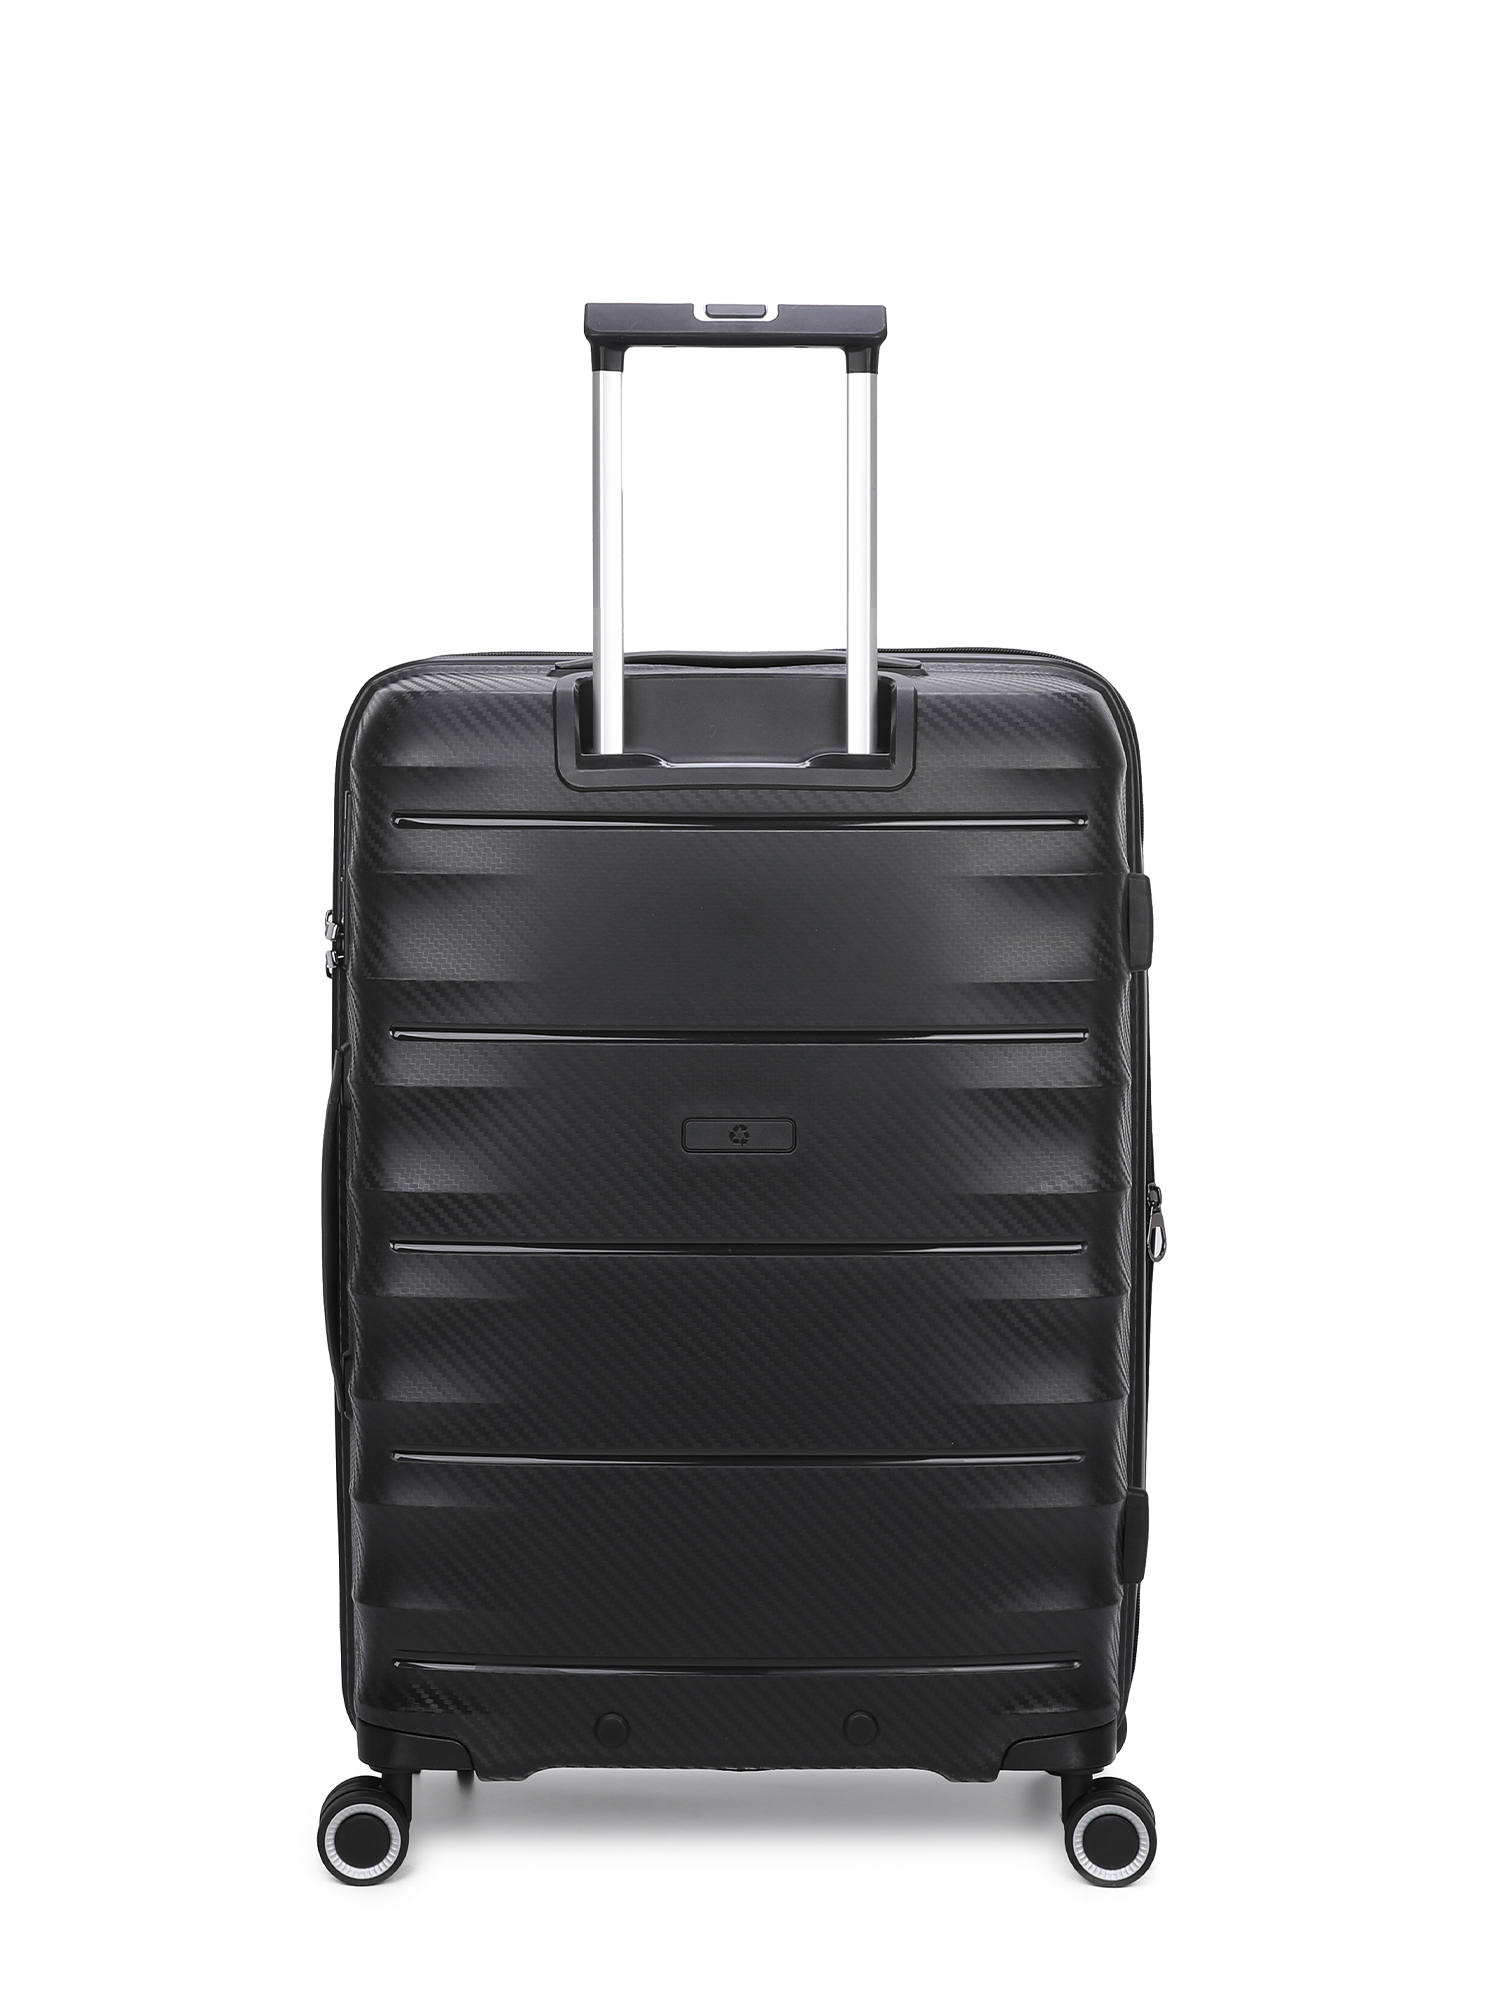 NZTourist Pro Traveller 65cm Suitcase - White